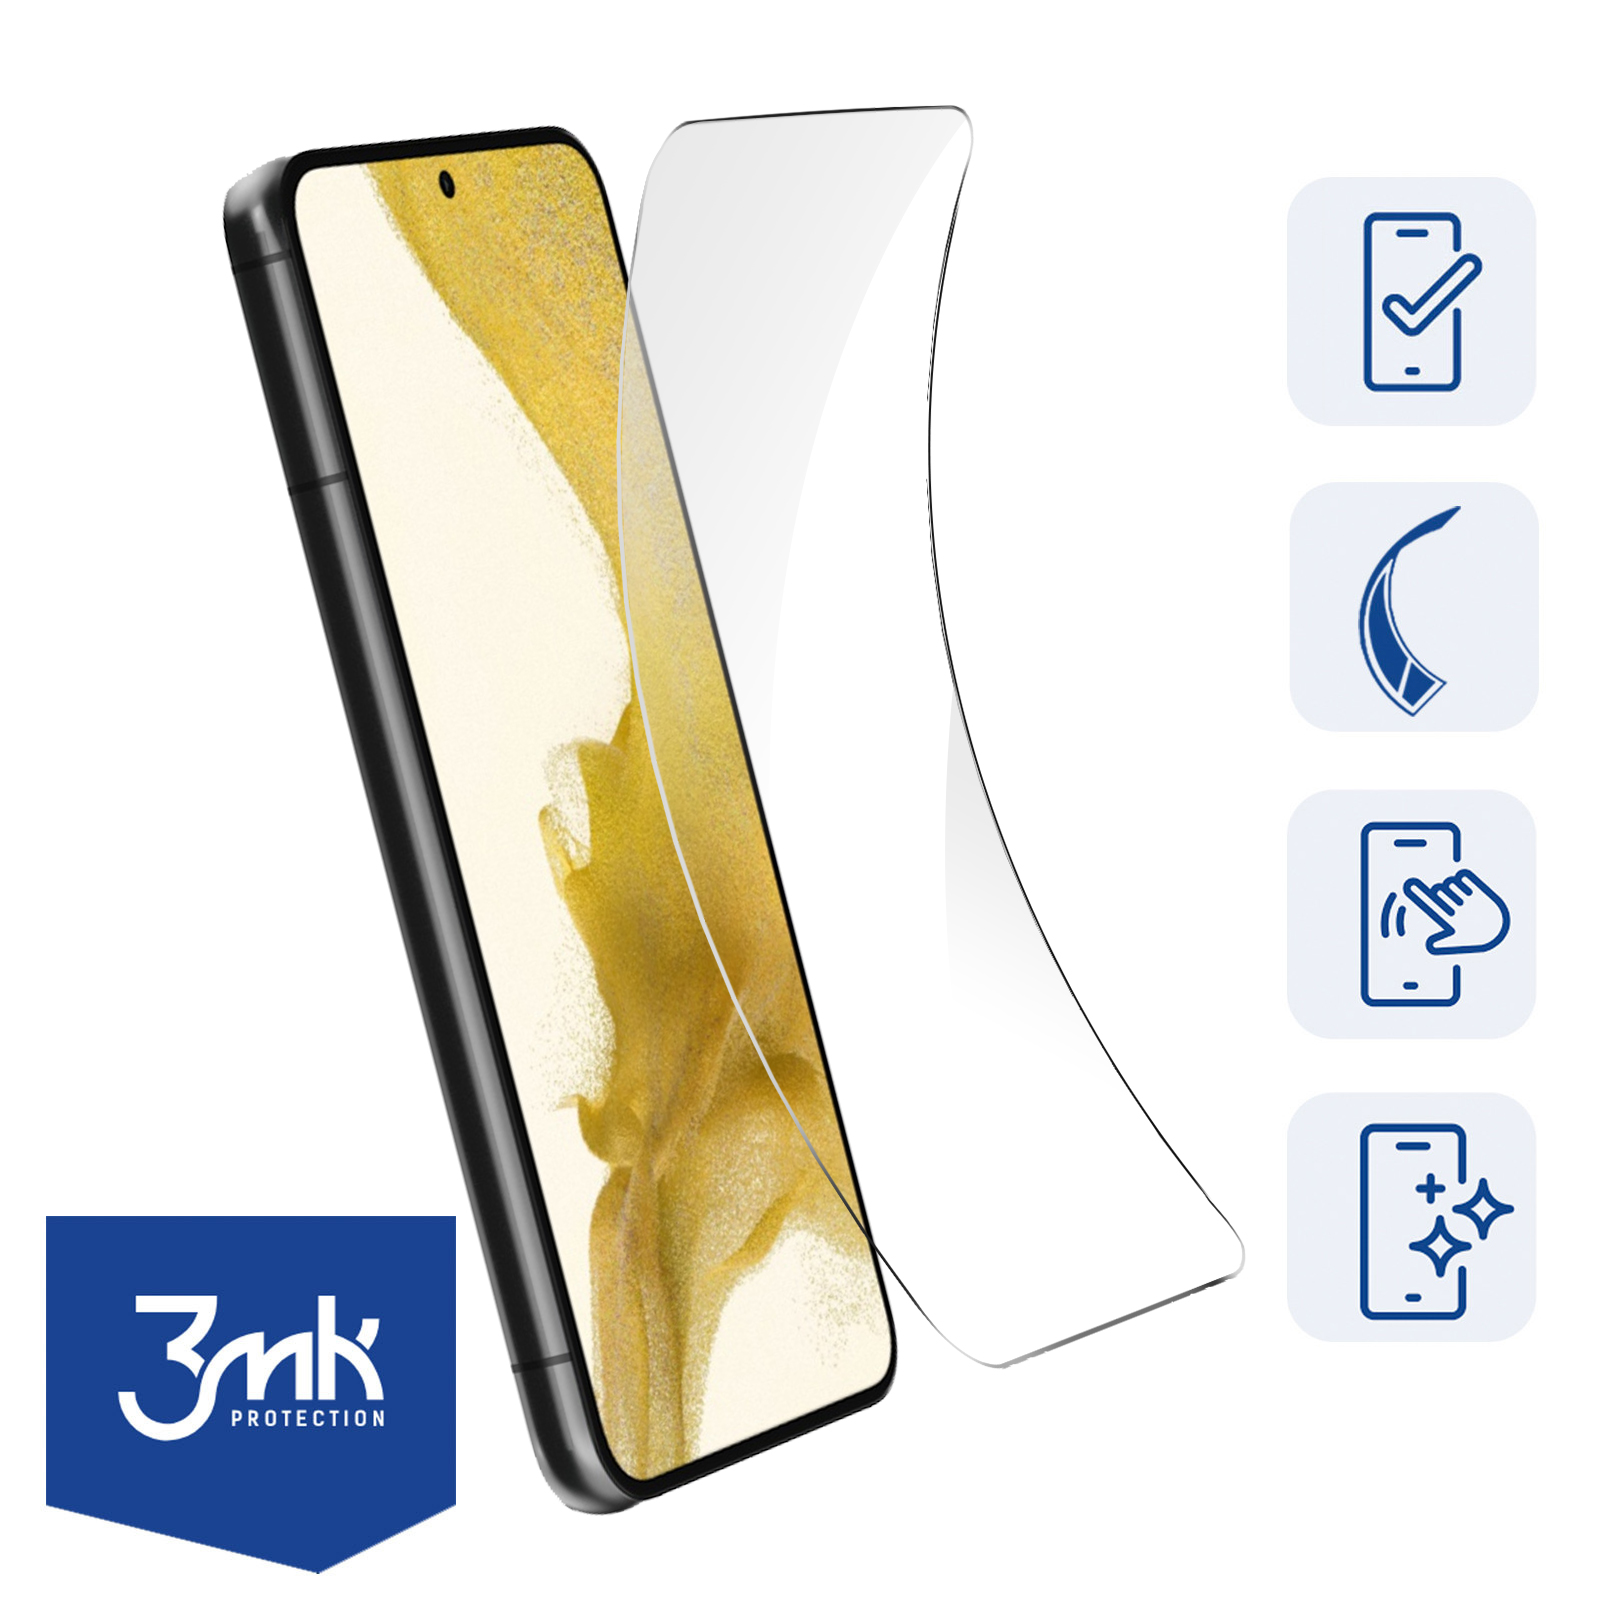 Protections écran & verres trempés Samsung Galaxy S22 chez Gsm55